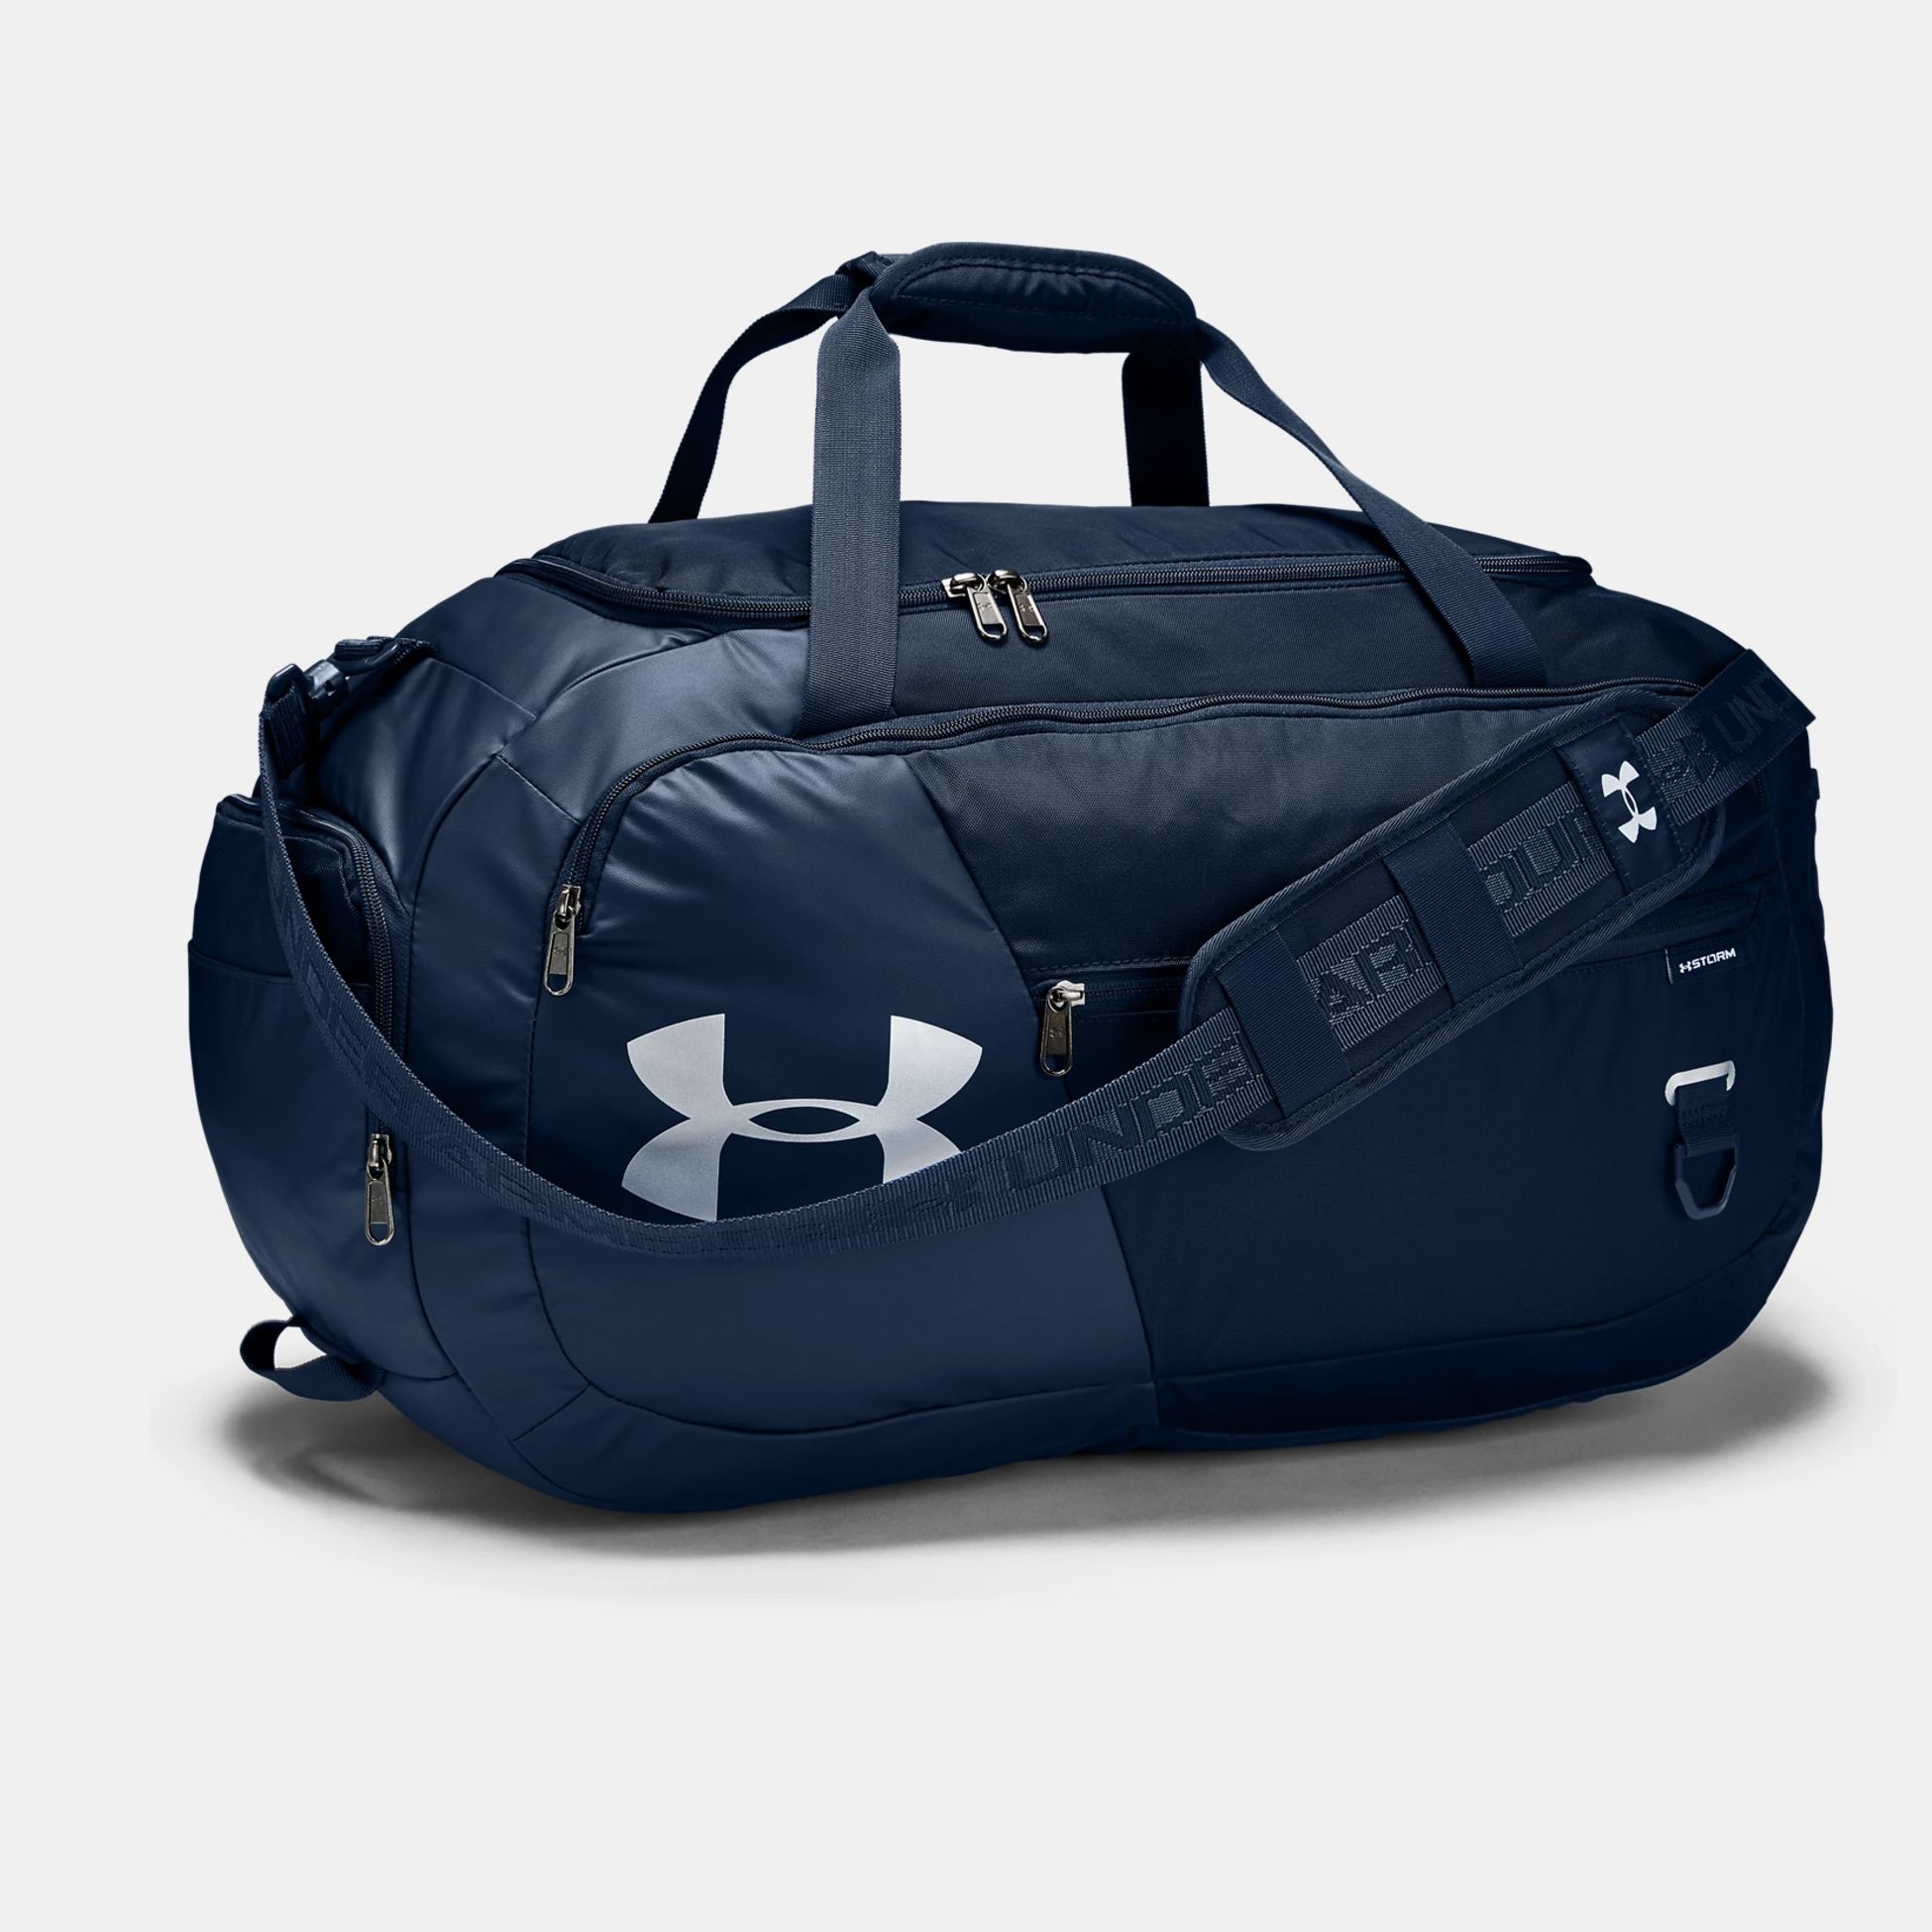 Bagpacks -  under armour UA Undeniable 4.0 Medium Duffle Bag 2657